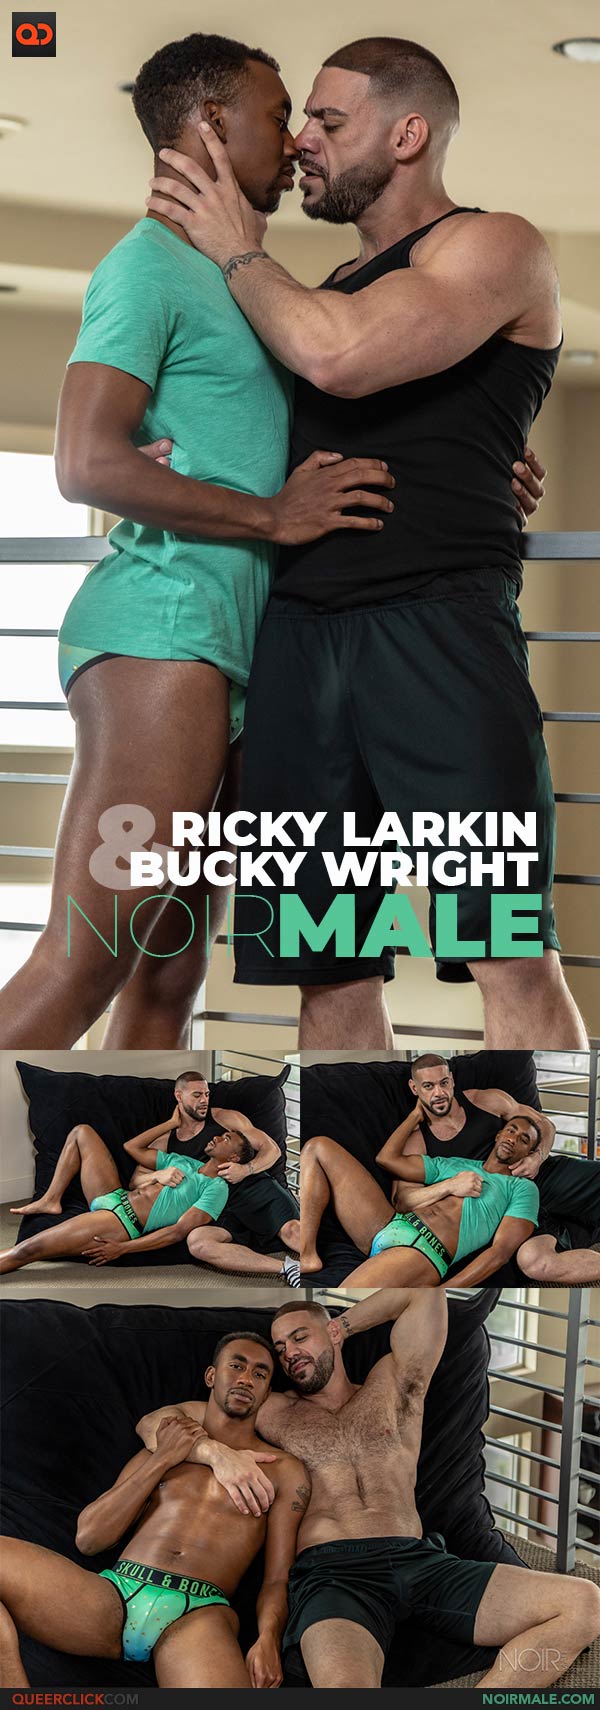 NoirMale: Bucky Wright and Ricky Larkin